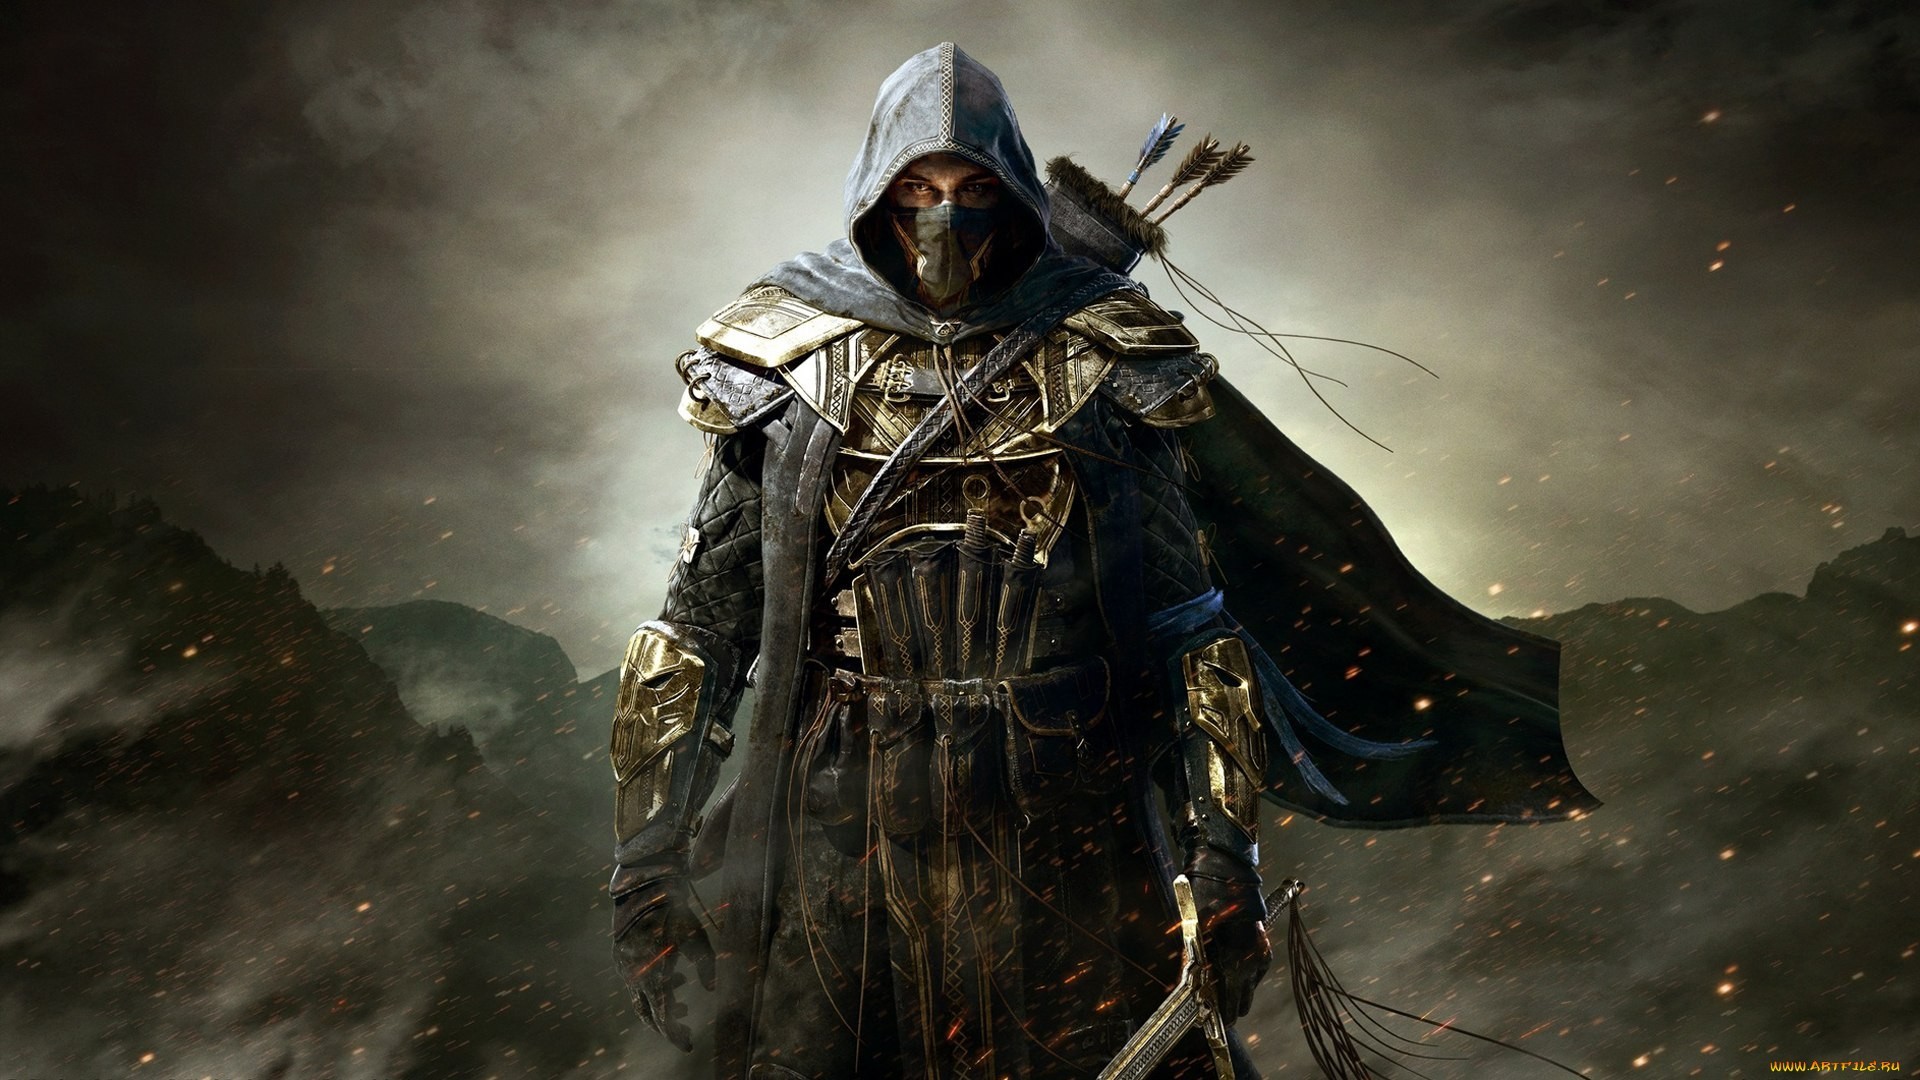 Video Game The Elder Scrolls Online HD Wallpaper | Background Image